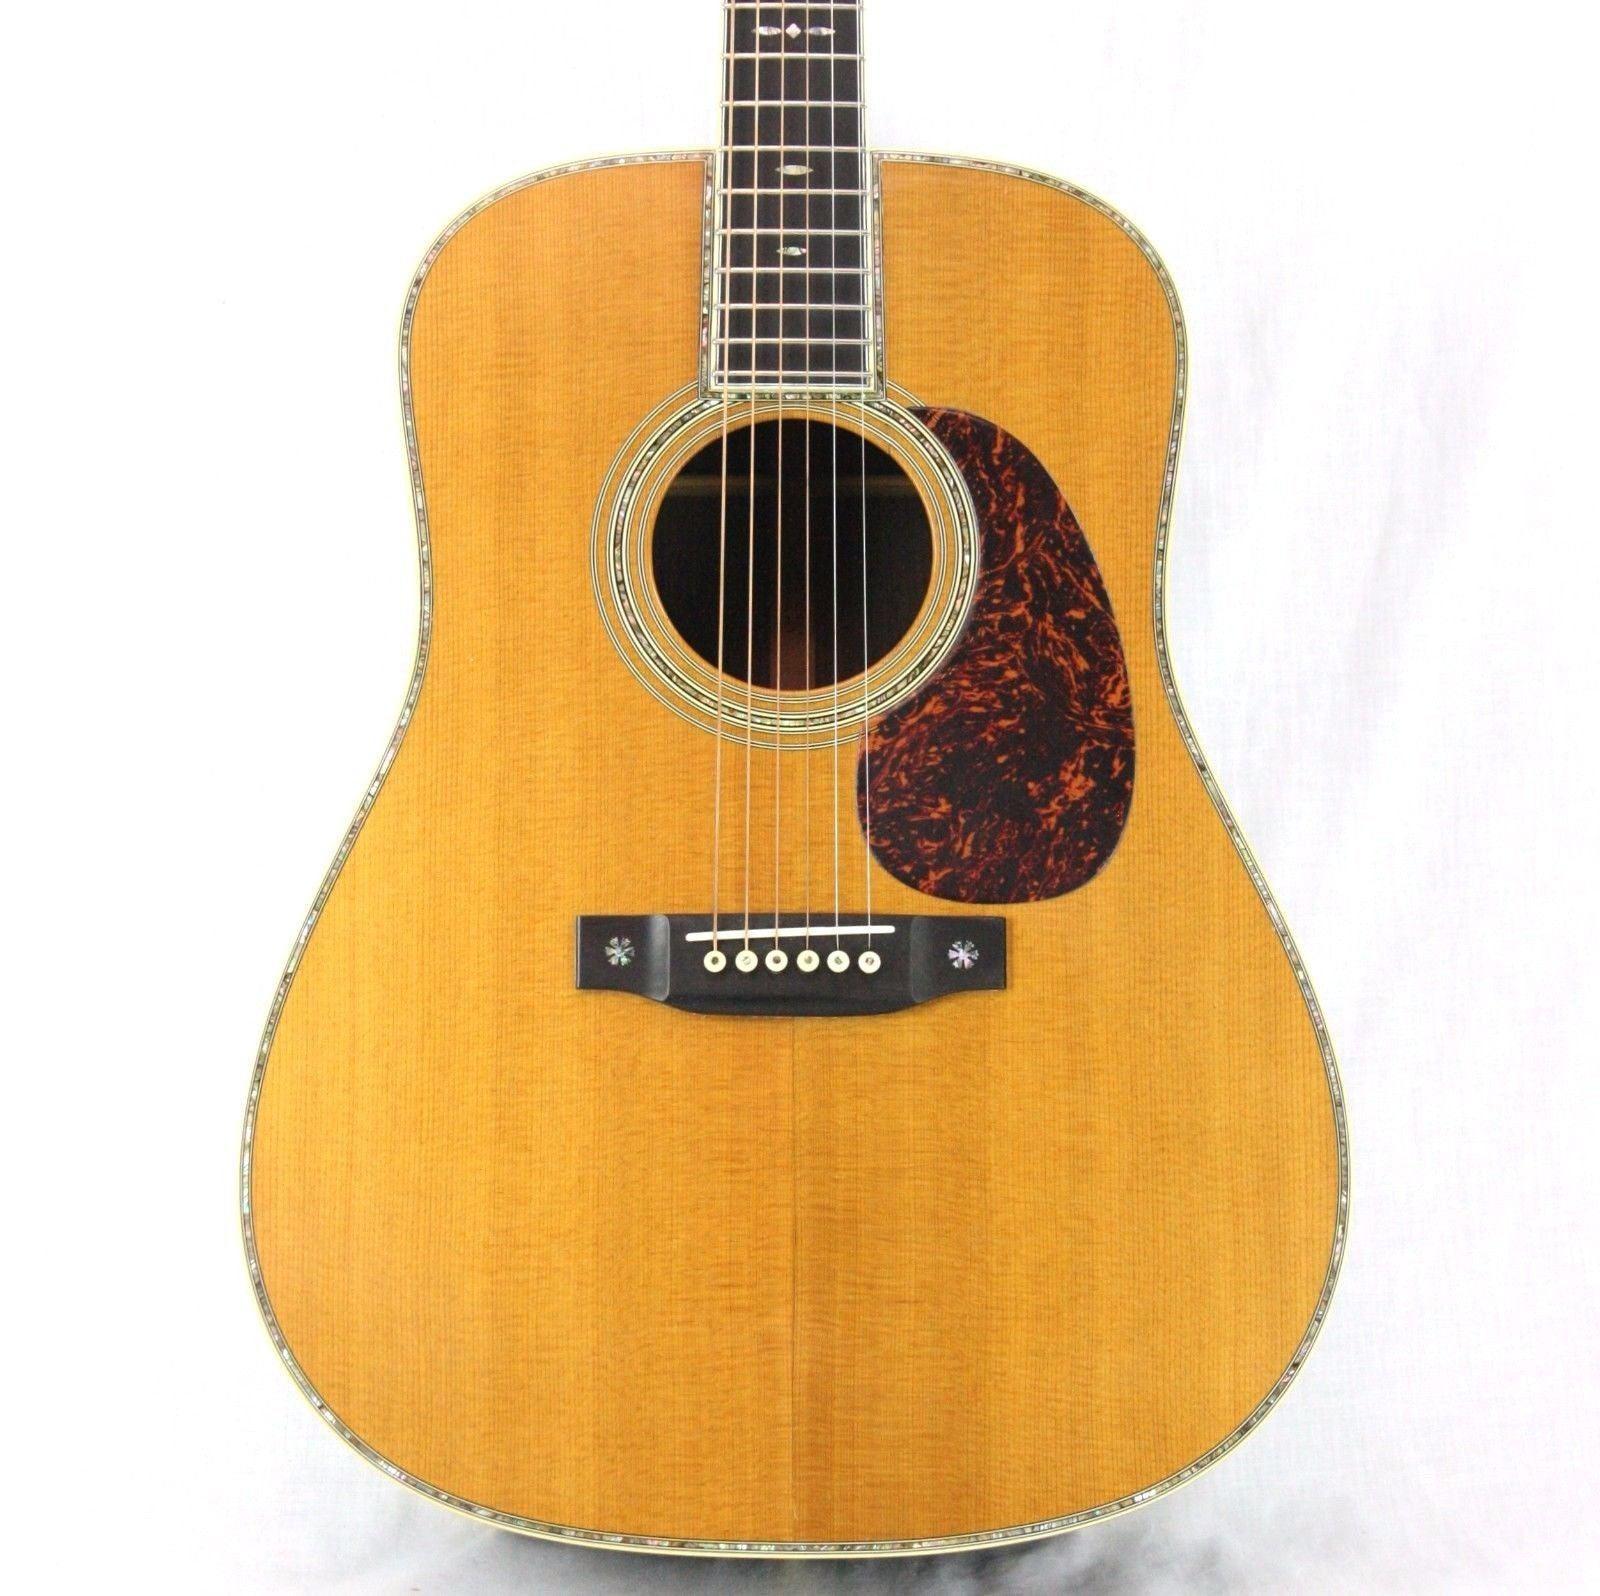 *SOLD*  1995 Martin D-42 Acoustic Guitar w/ Original Case! Pearl Top 28 18 45 D42 41 35